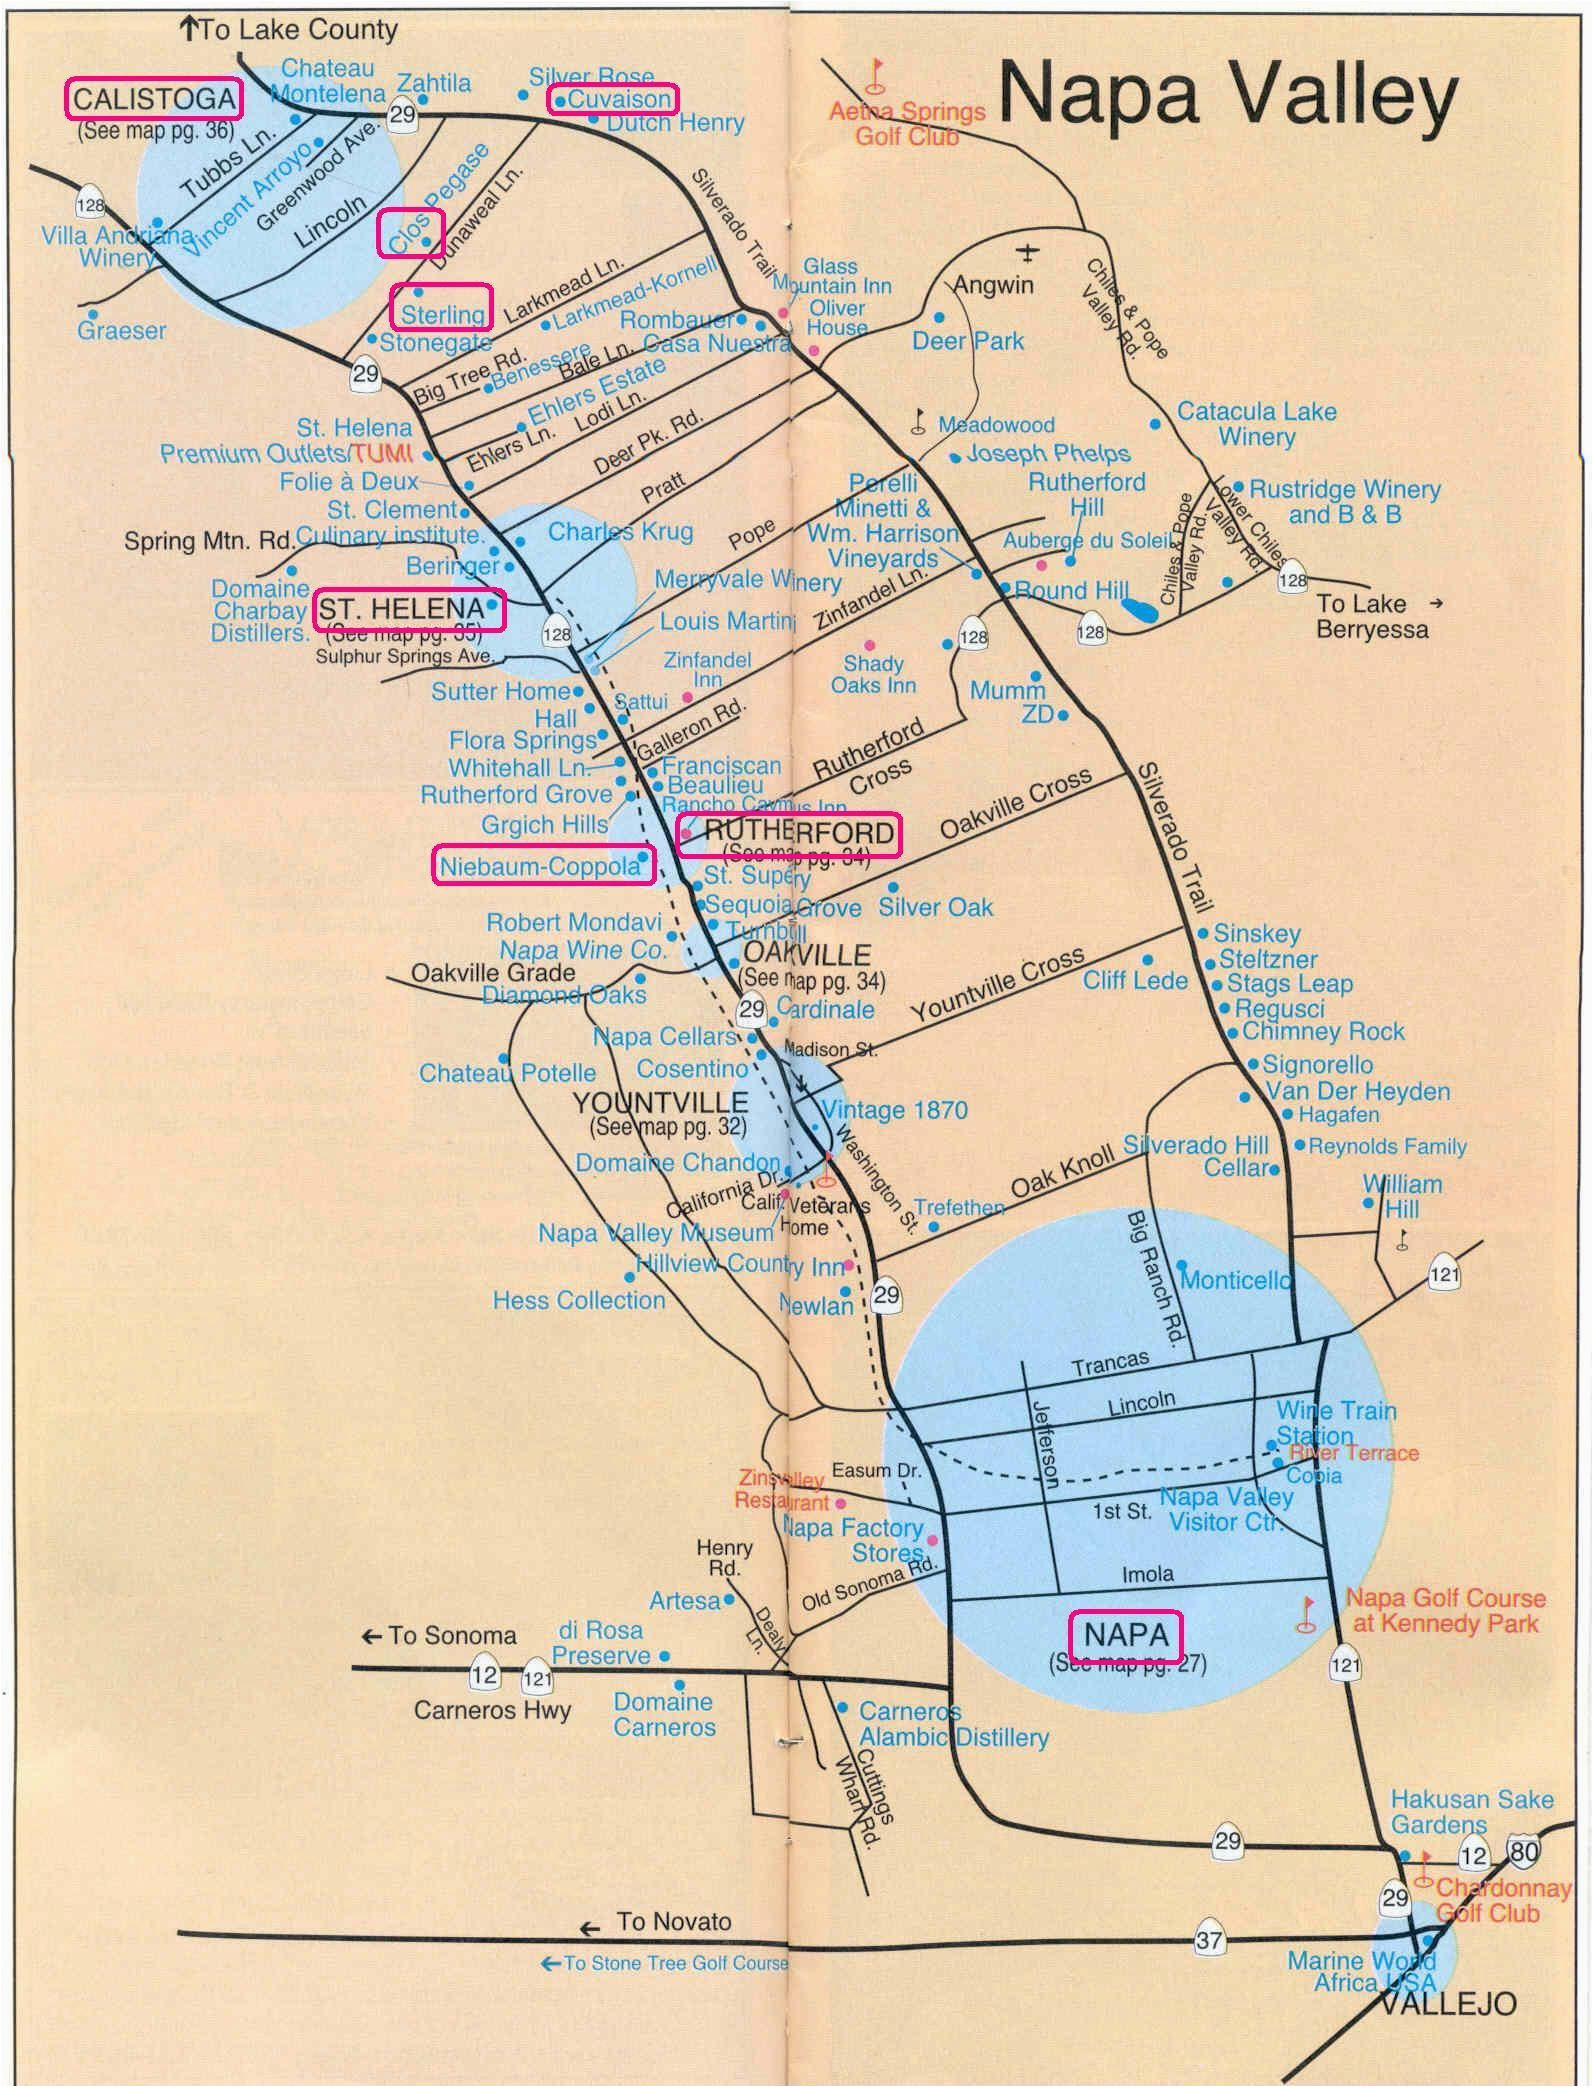 map of paso robles california massivegroove com